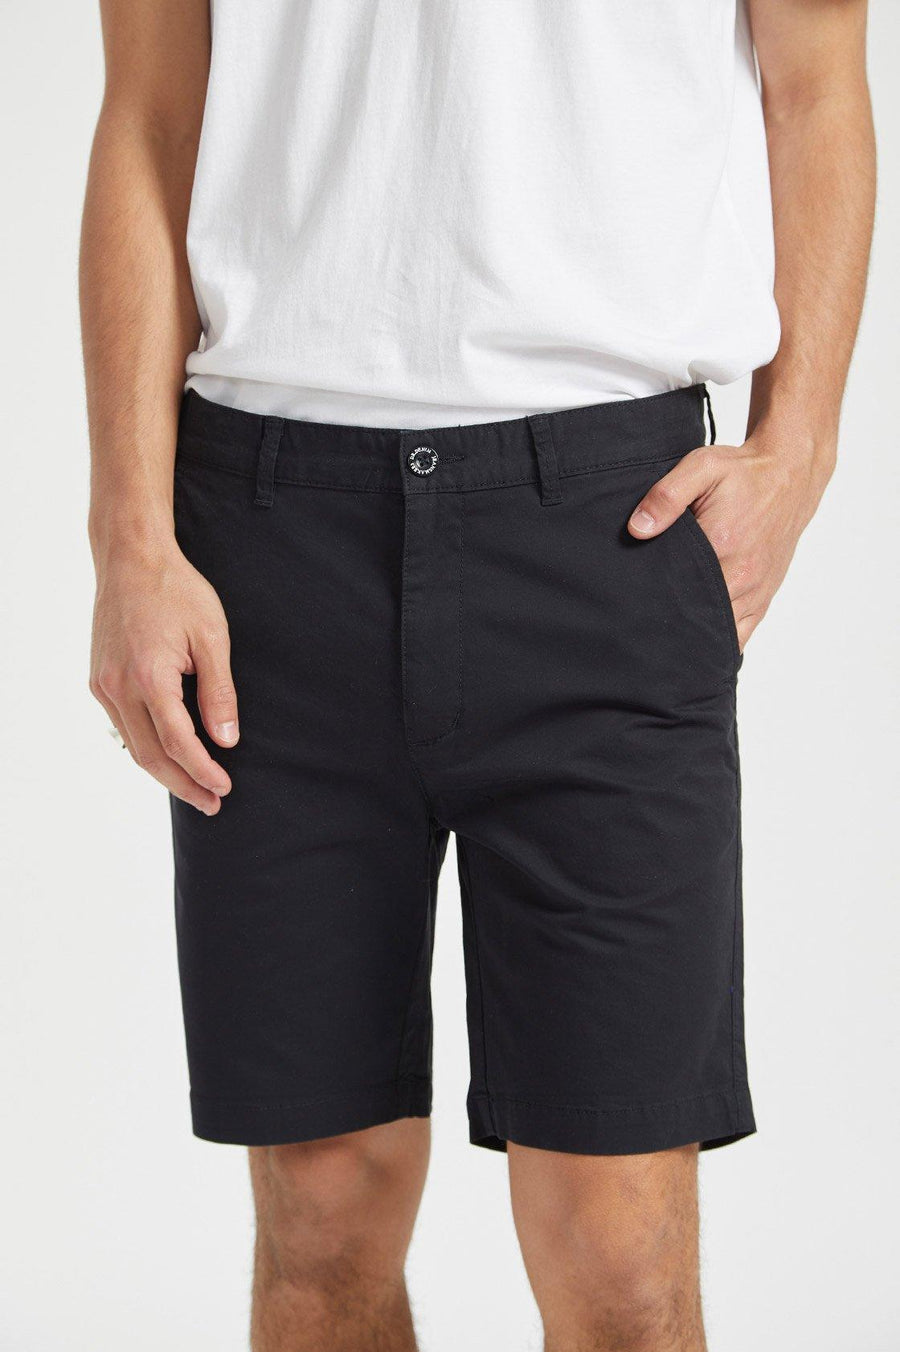 Wood Shorts Black - Dr Denim Jeans - Australia & NZ